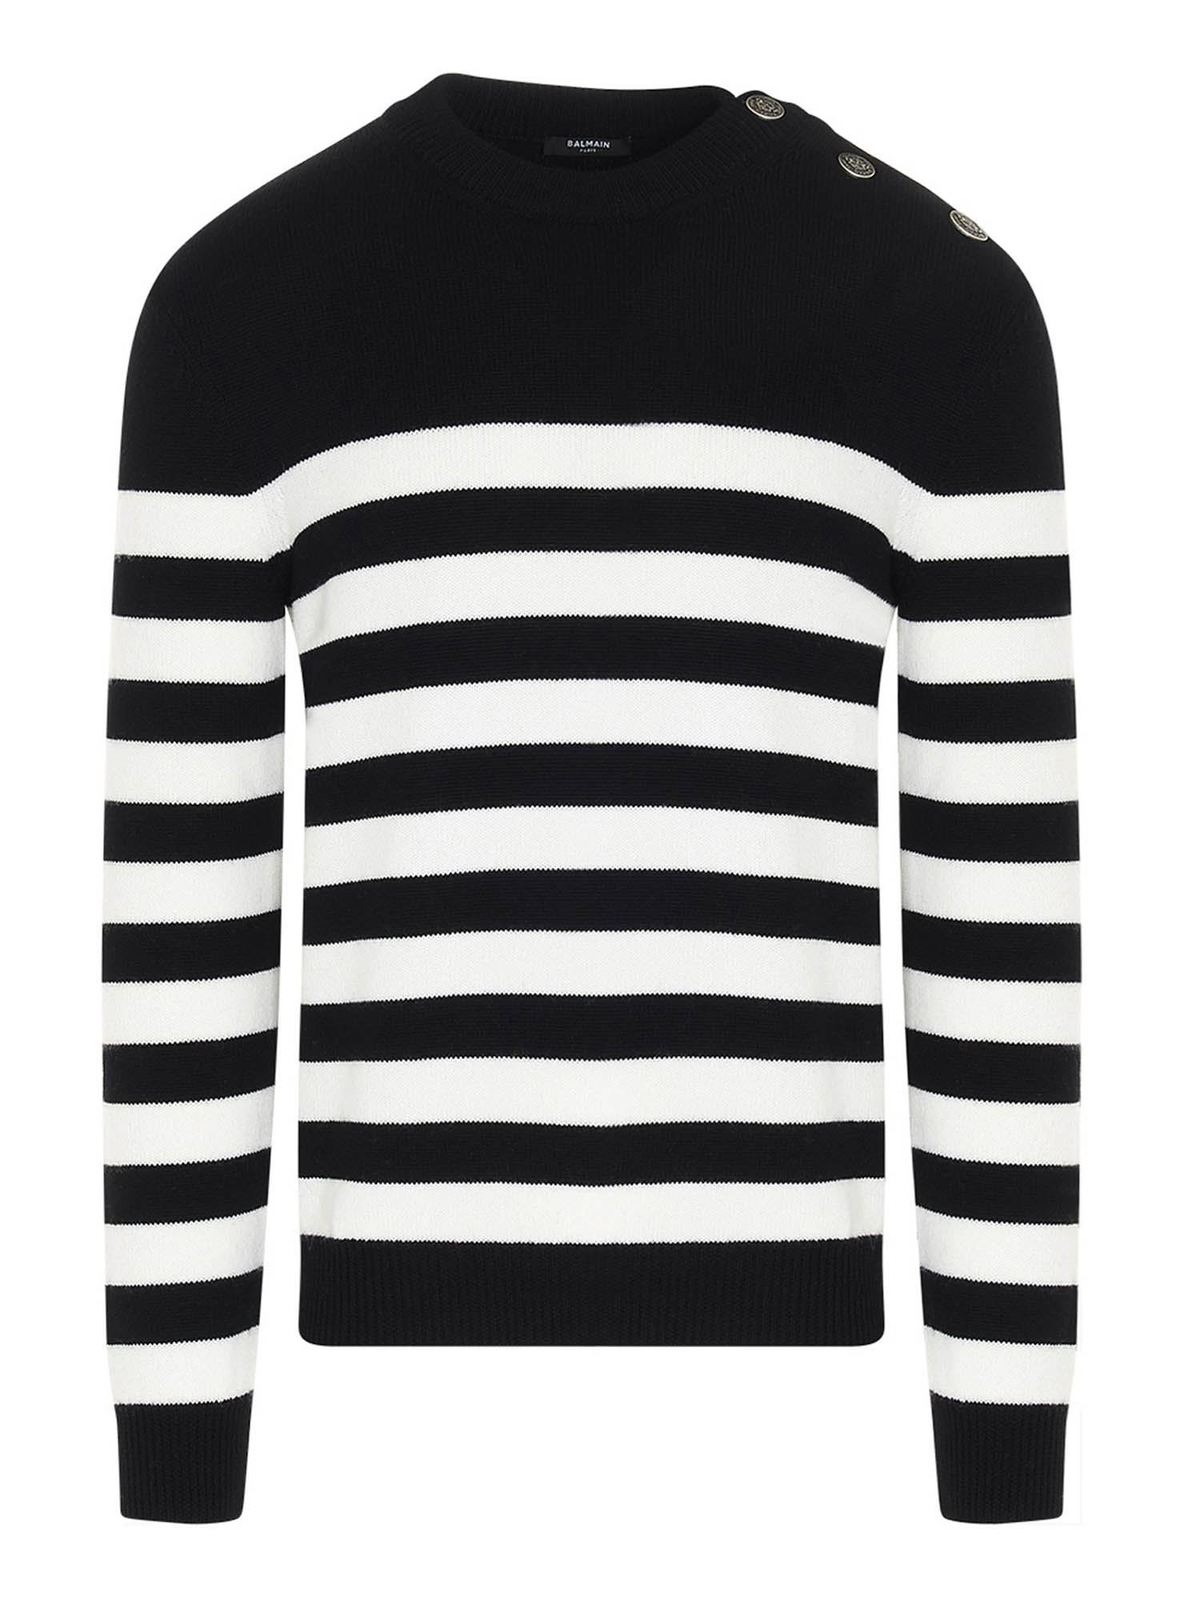 Balmain - Striped sweater in black and white - crew necks - UH3432K030EAB